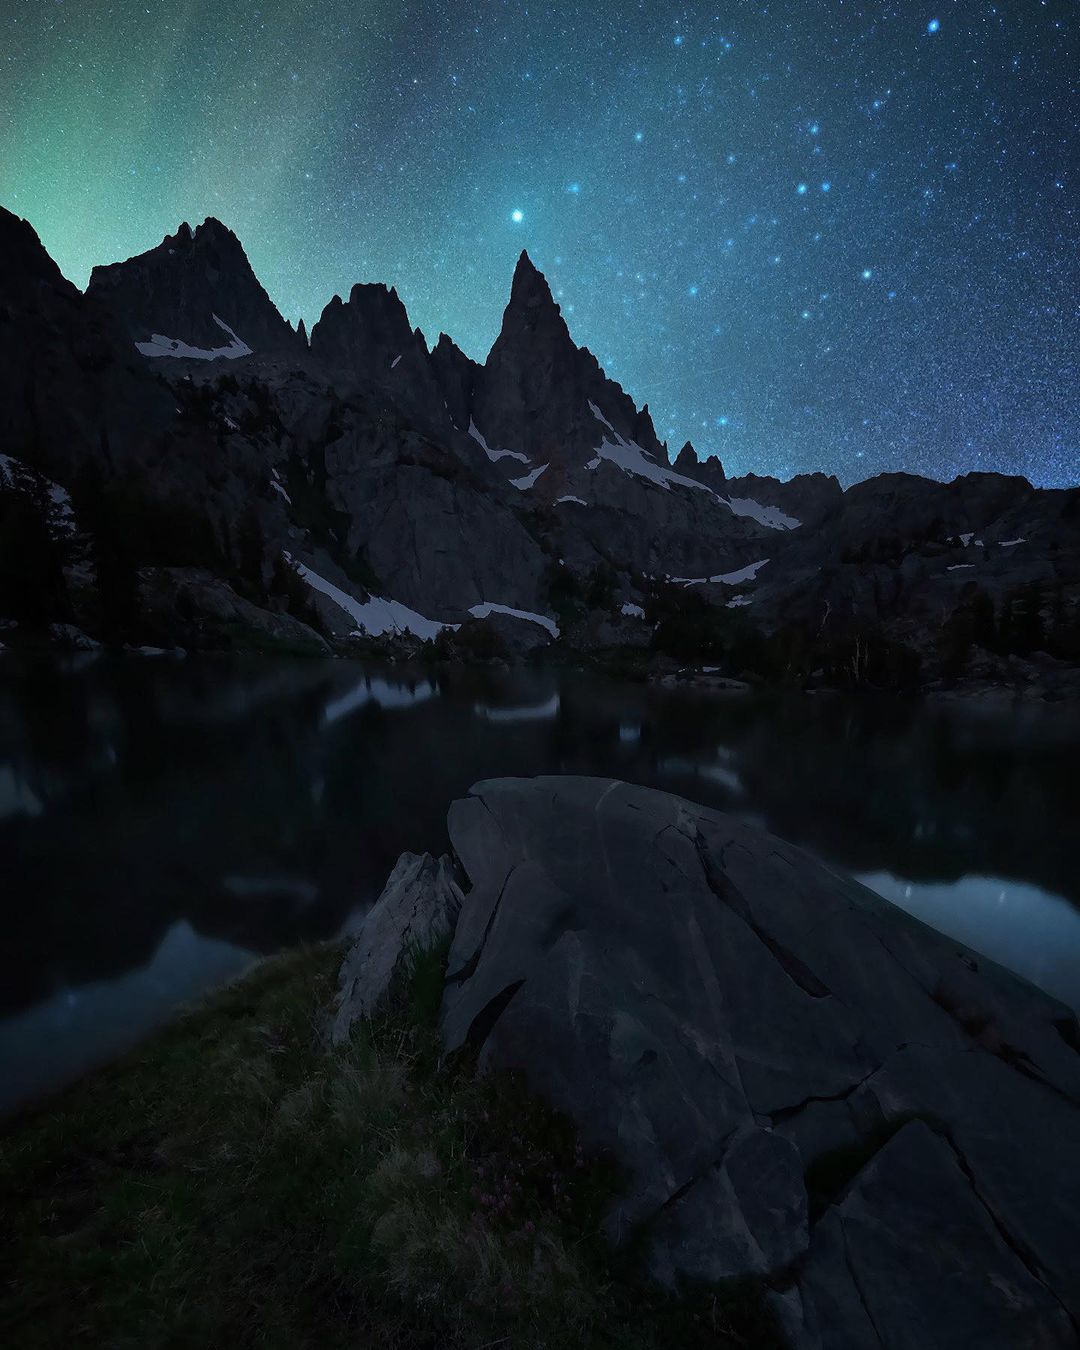 Ночное небо на астроснимках Дерека Стермена